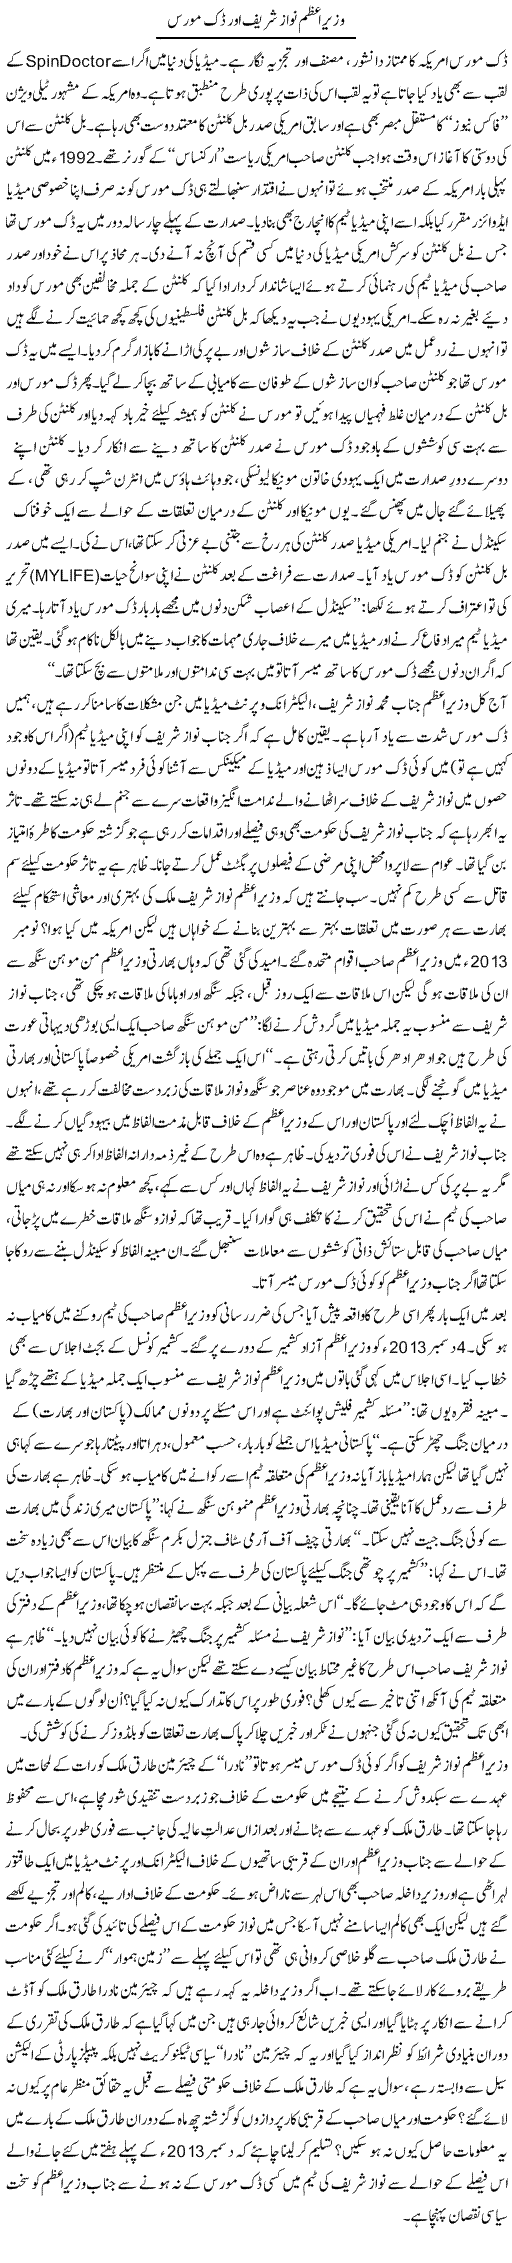 Wazeer Azam Nawaz Sharif Our Dick Moris | Tanveer Qaisar Shahid | Daily Urdu Columns